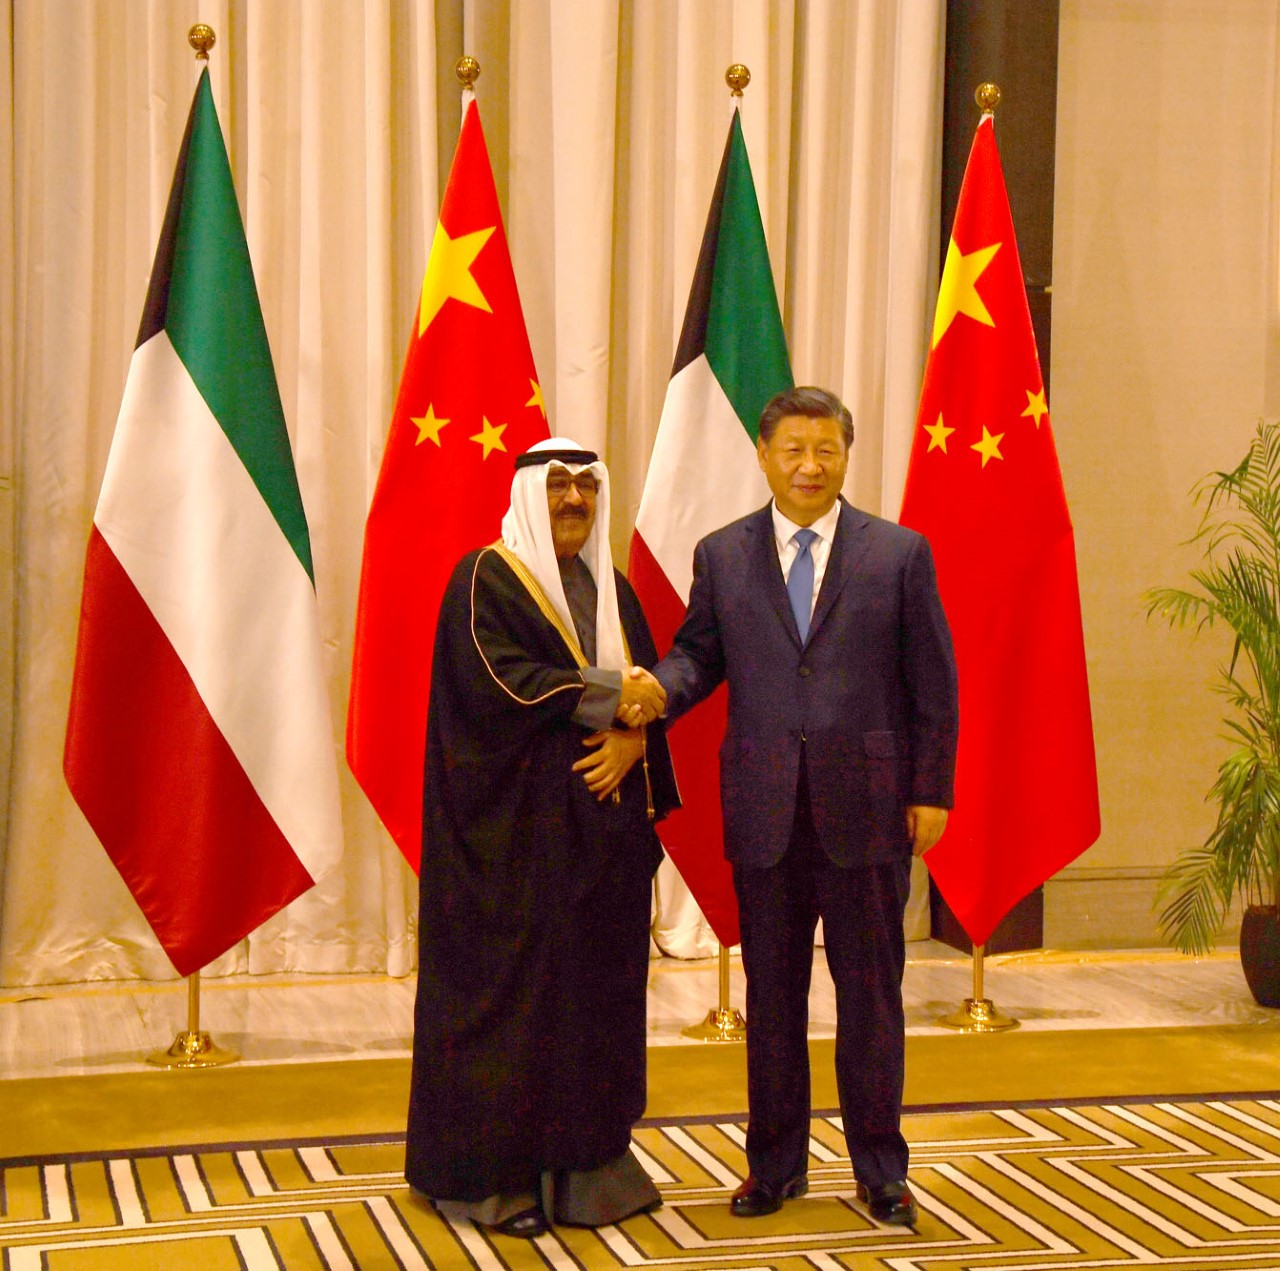 Kuwait Amir's Representative meets Chinese Pres. in Riyadh